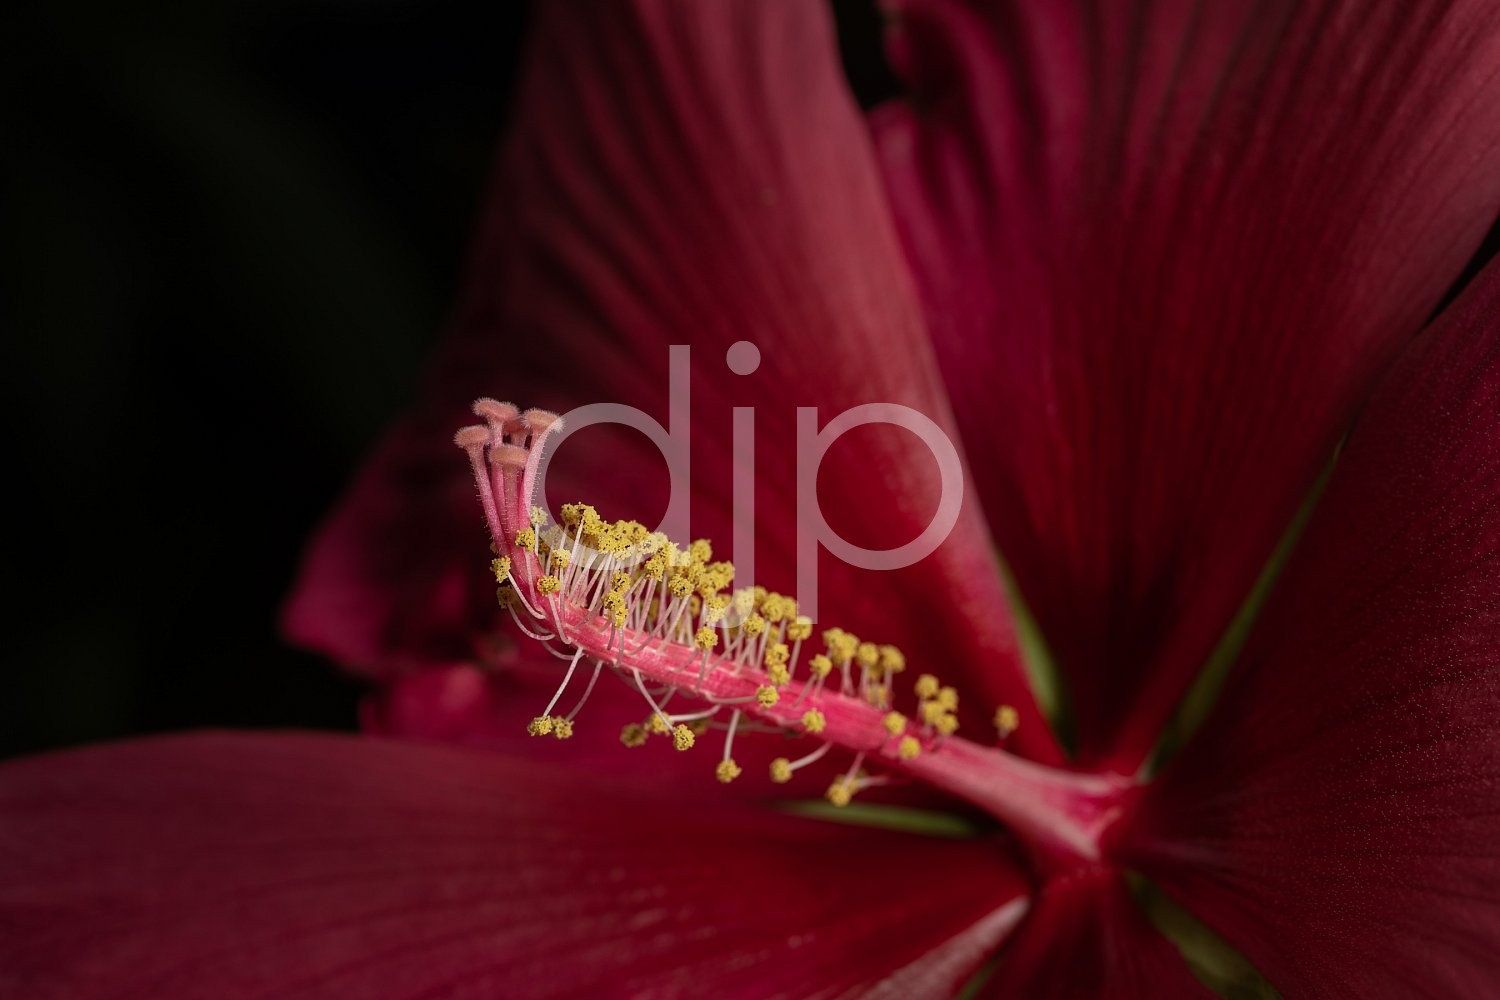 Sugar Land, djonesphoto, excursions with djp, flower, hibiscus, macro, personal, quarantine, yellow, D Jones Photography